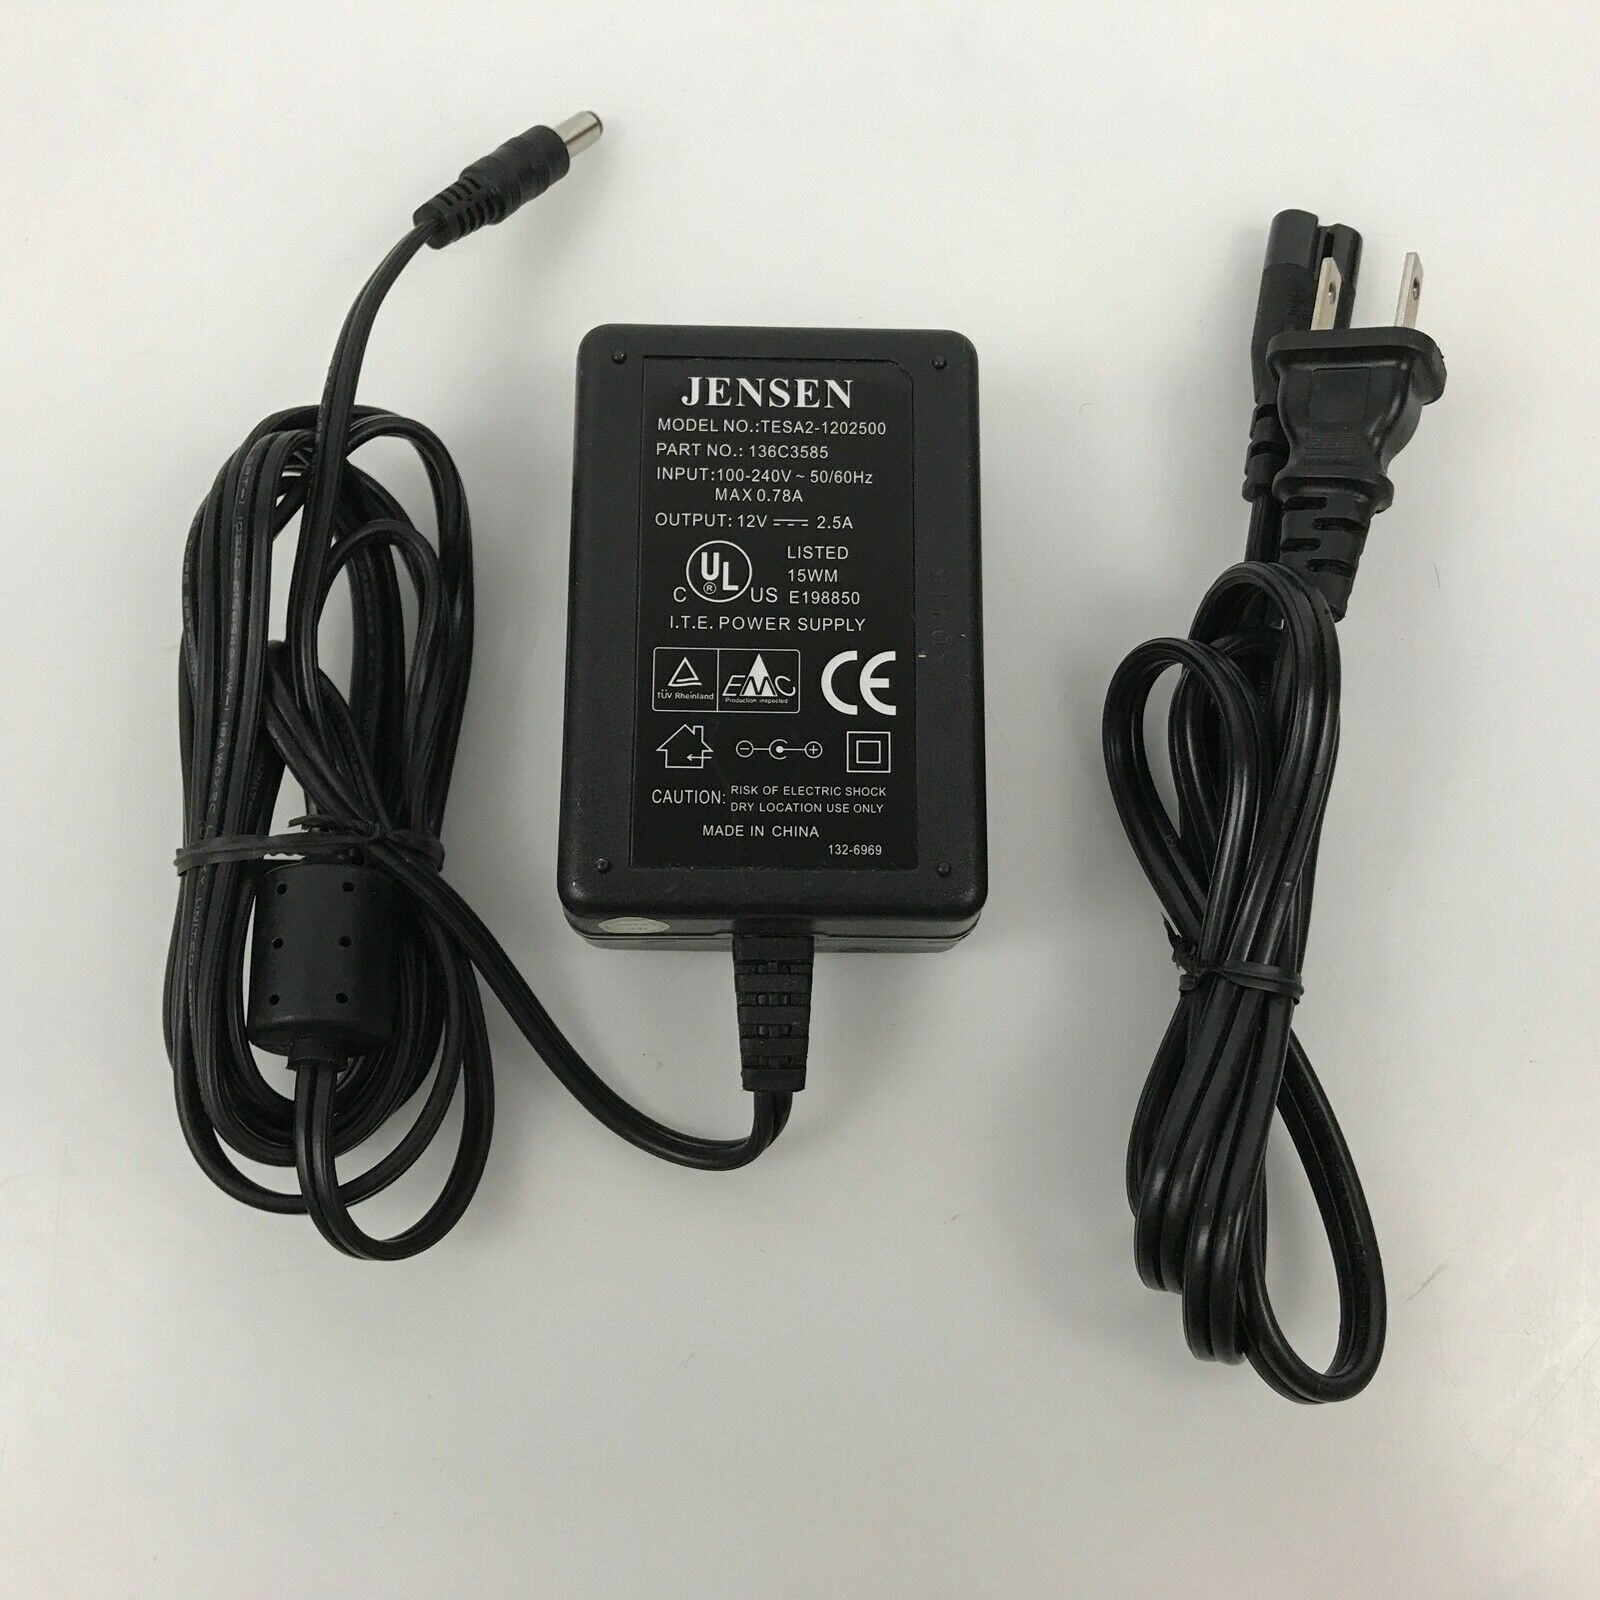 NEW Jensen TESA2-1202500 12V 2.5A 136C3585 AC Power Adapter Supply